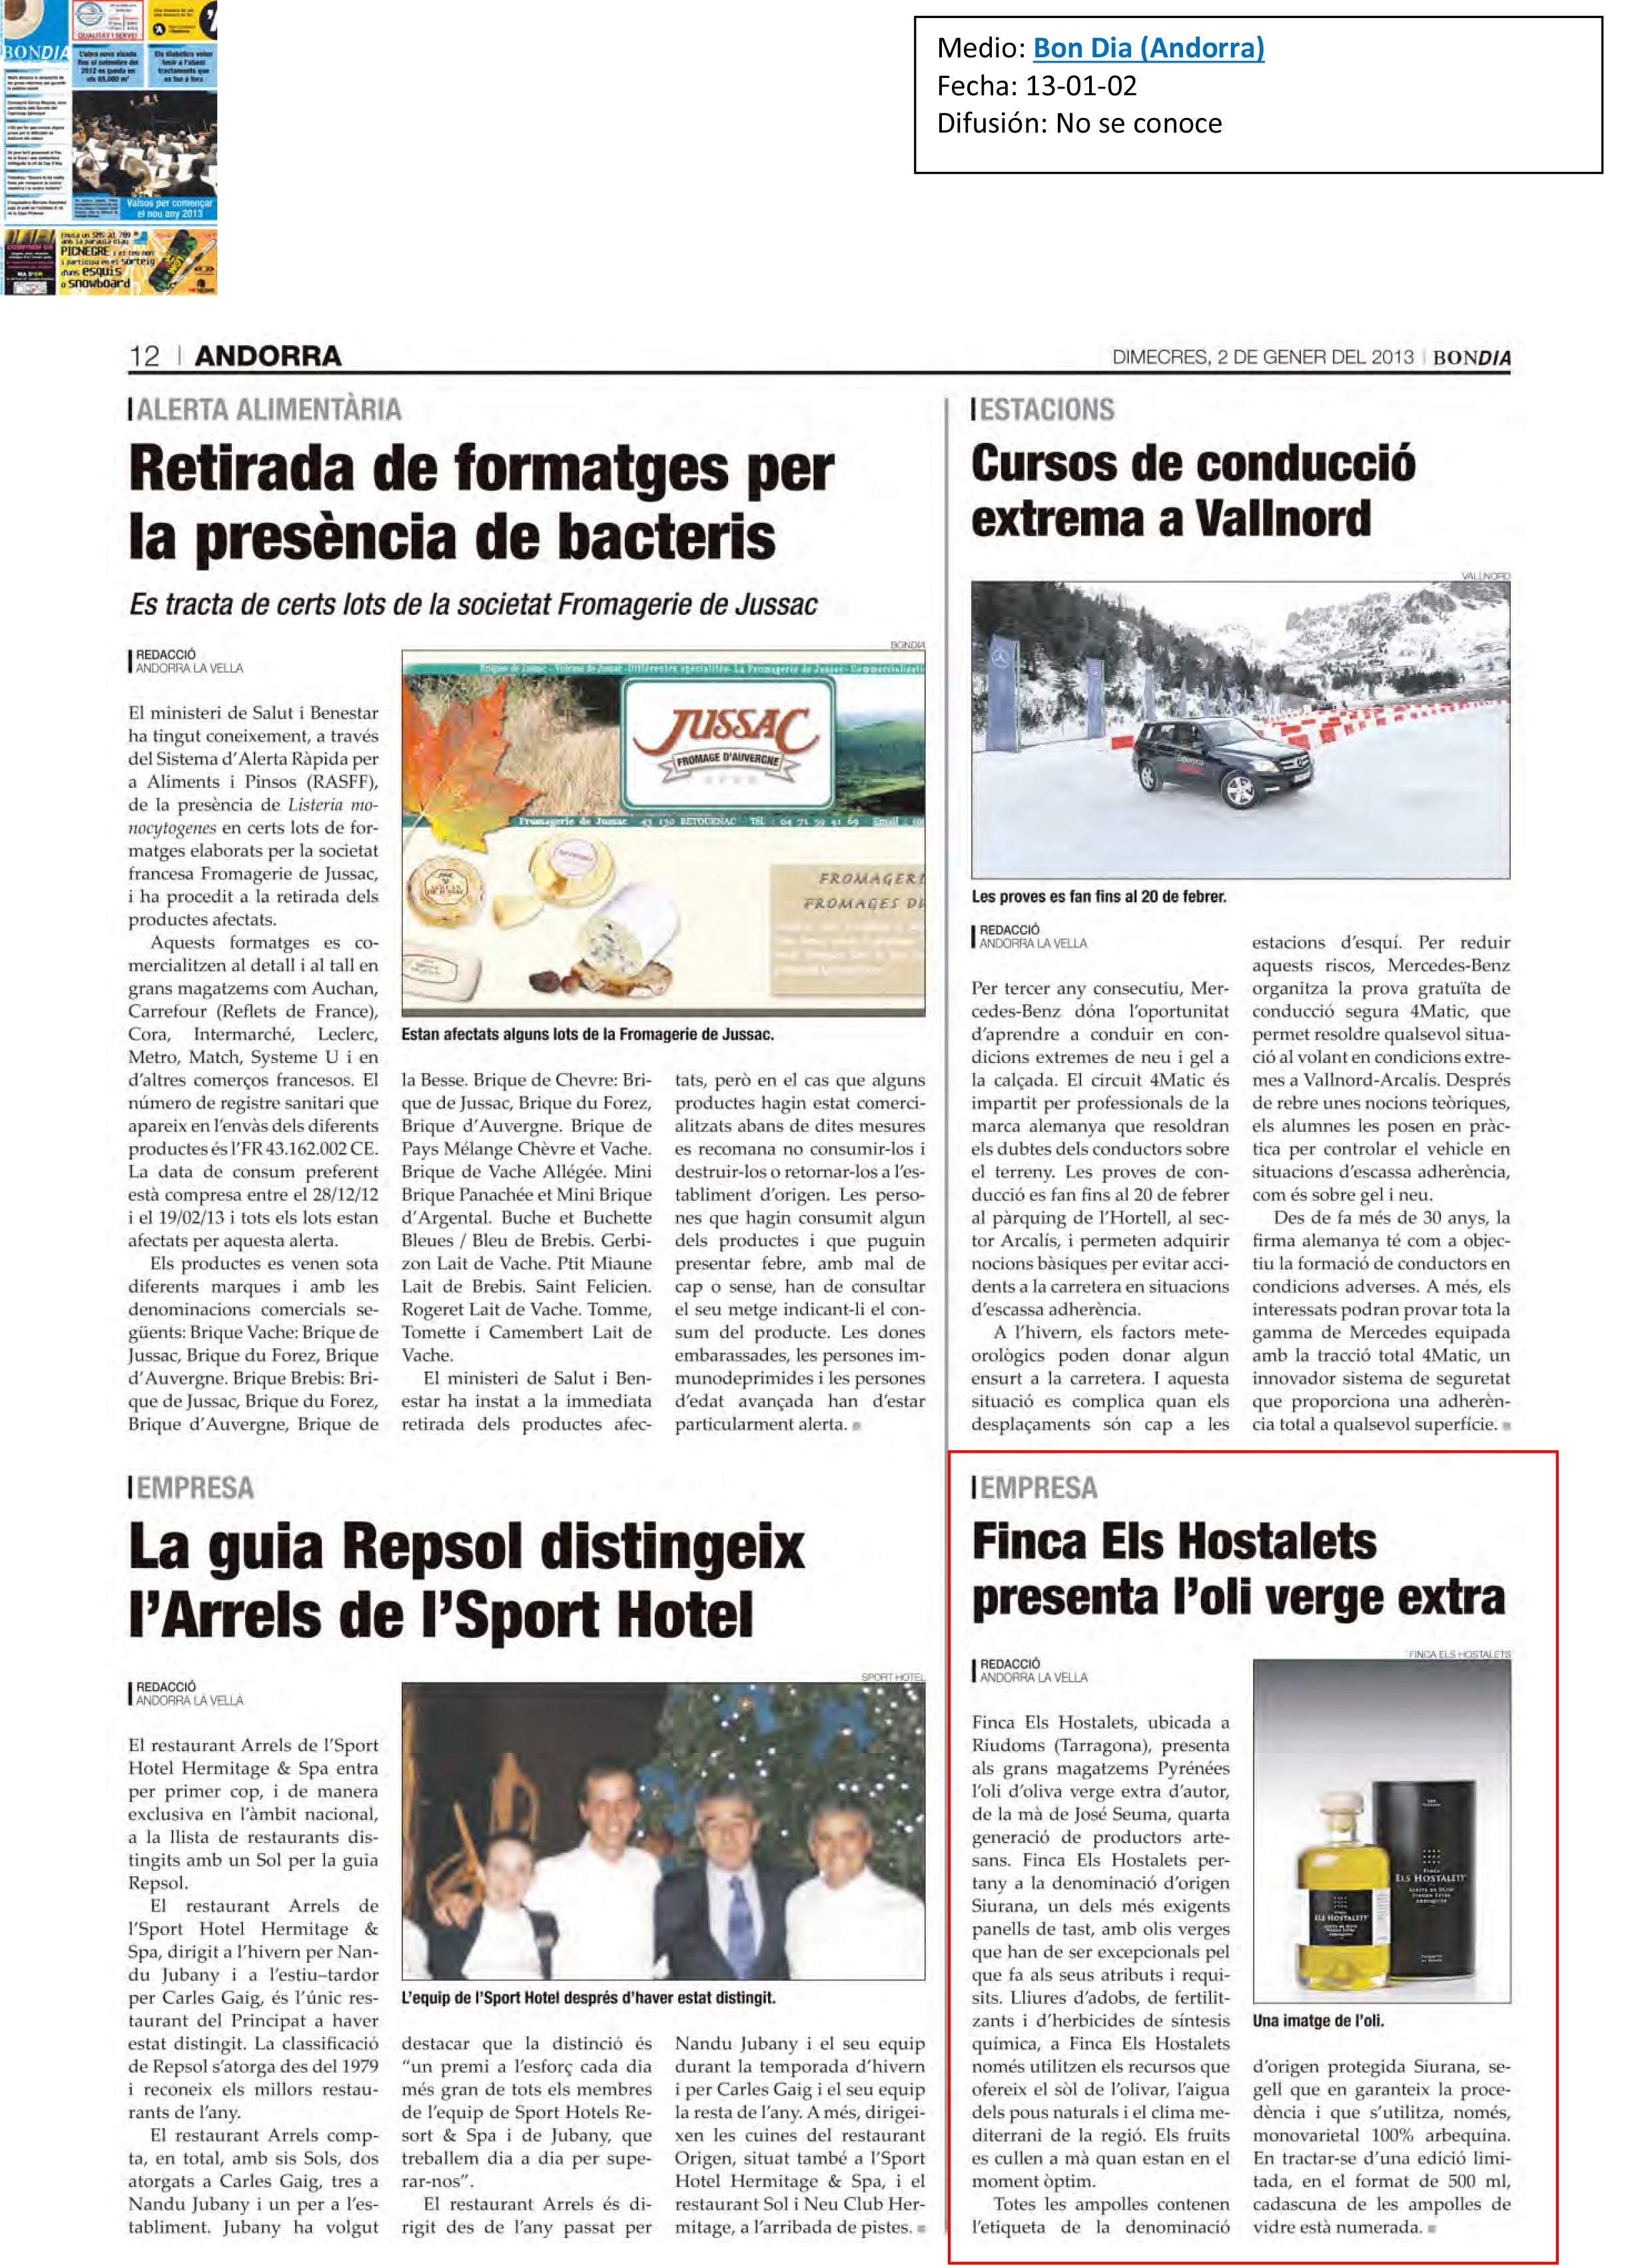 Aceite Finca Hostalets en diari Andorra